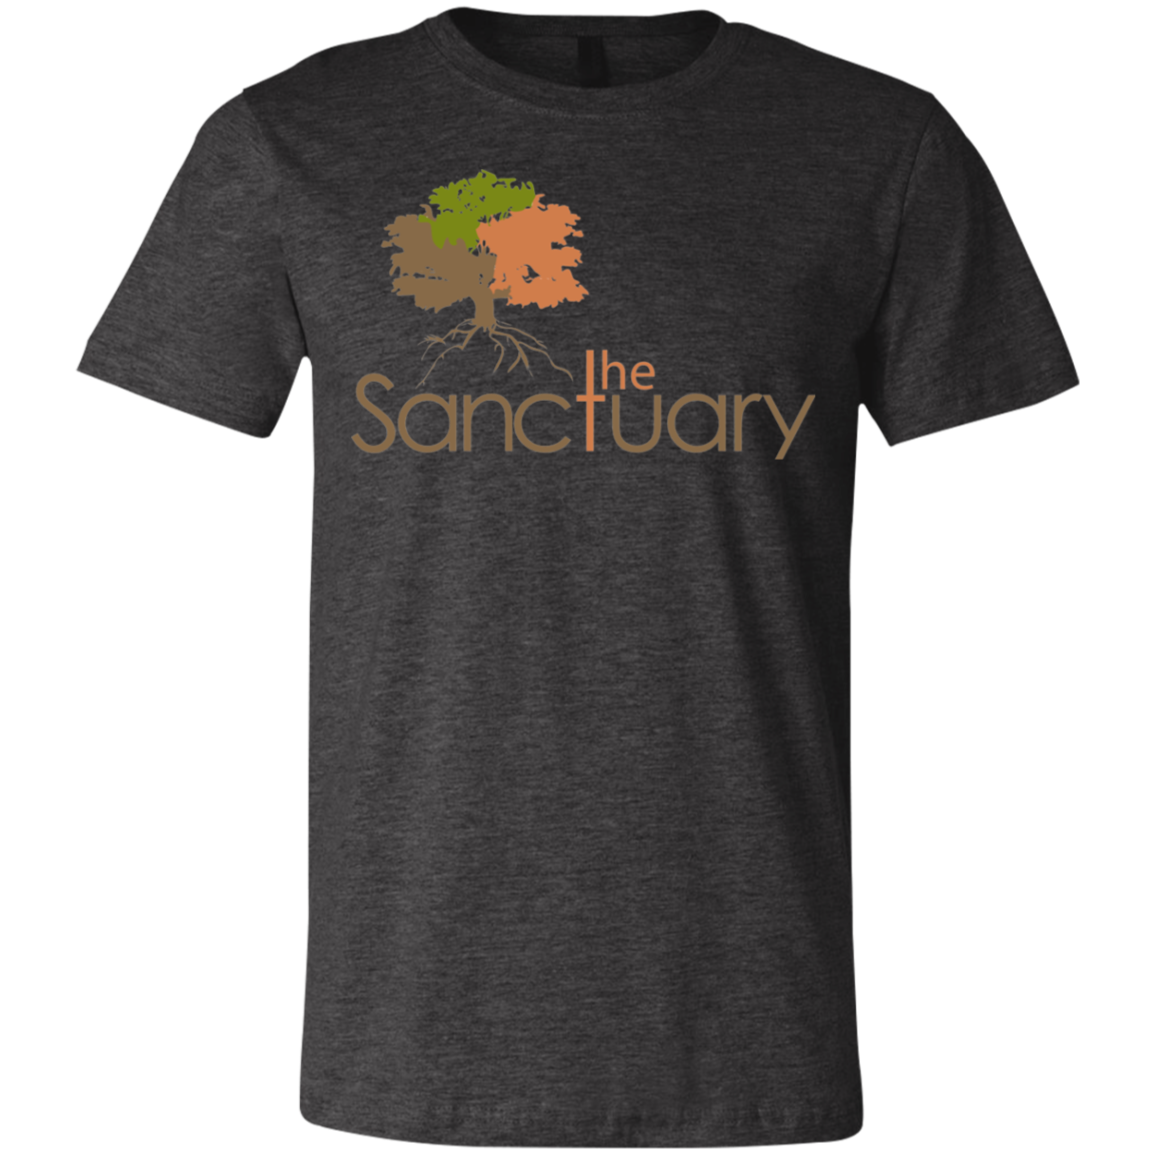 The Sanctuary - Youth Premium T-Shirt